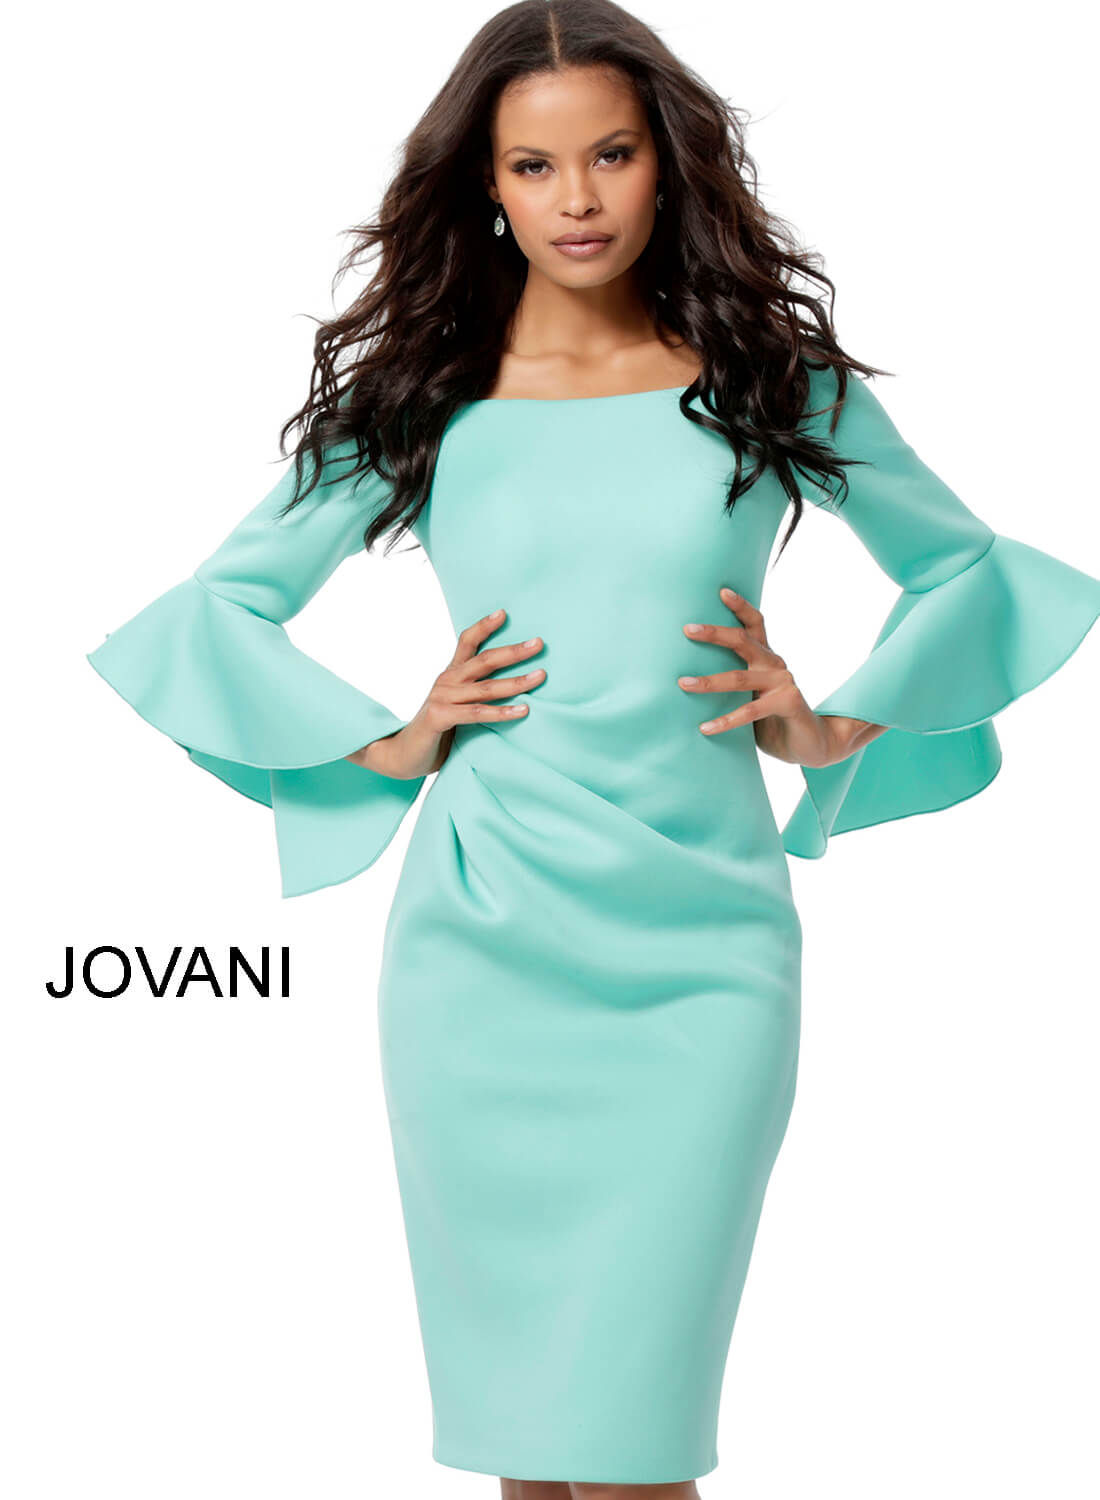 Jovani 59992 Aqua Scuba Bell Sleeve Knee Length Dress